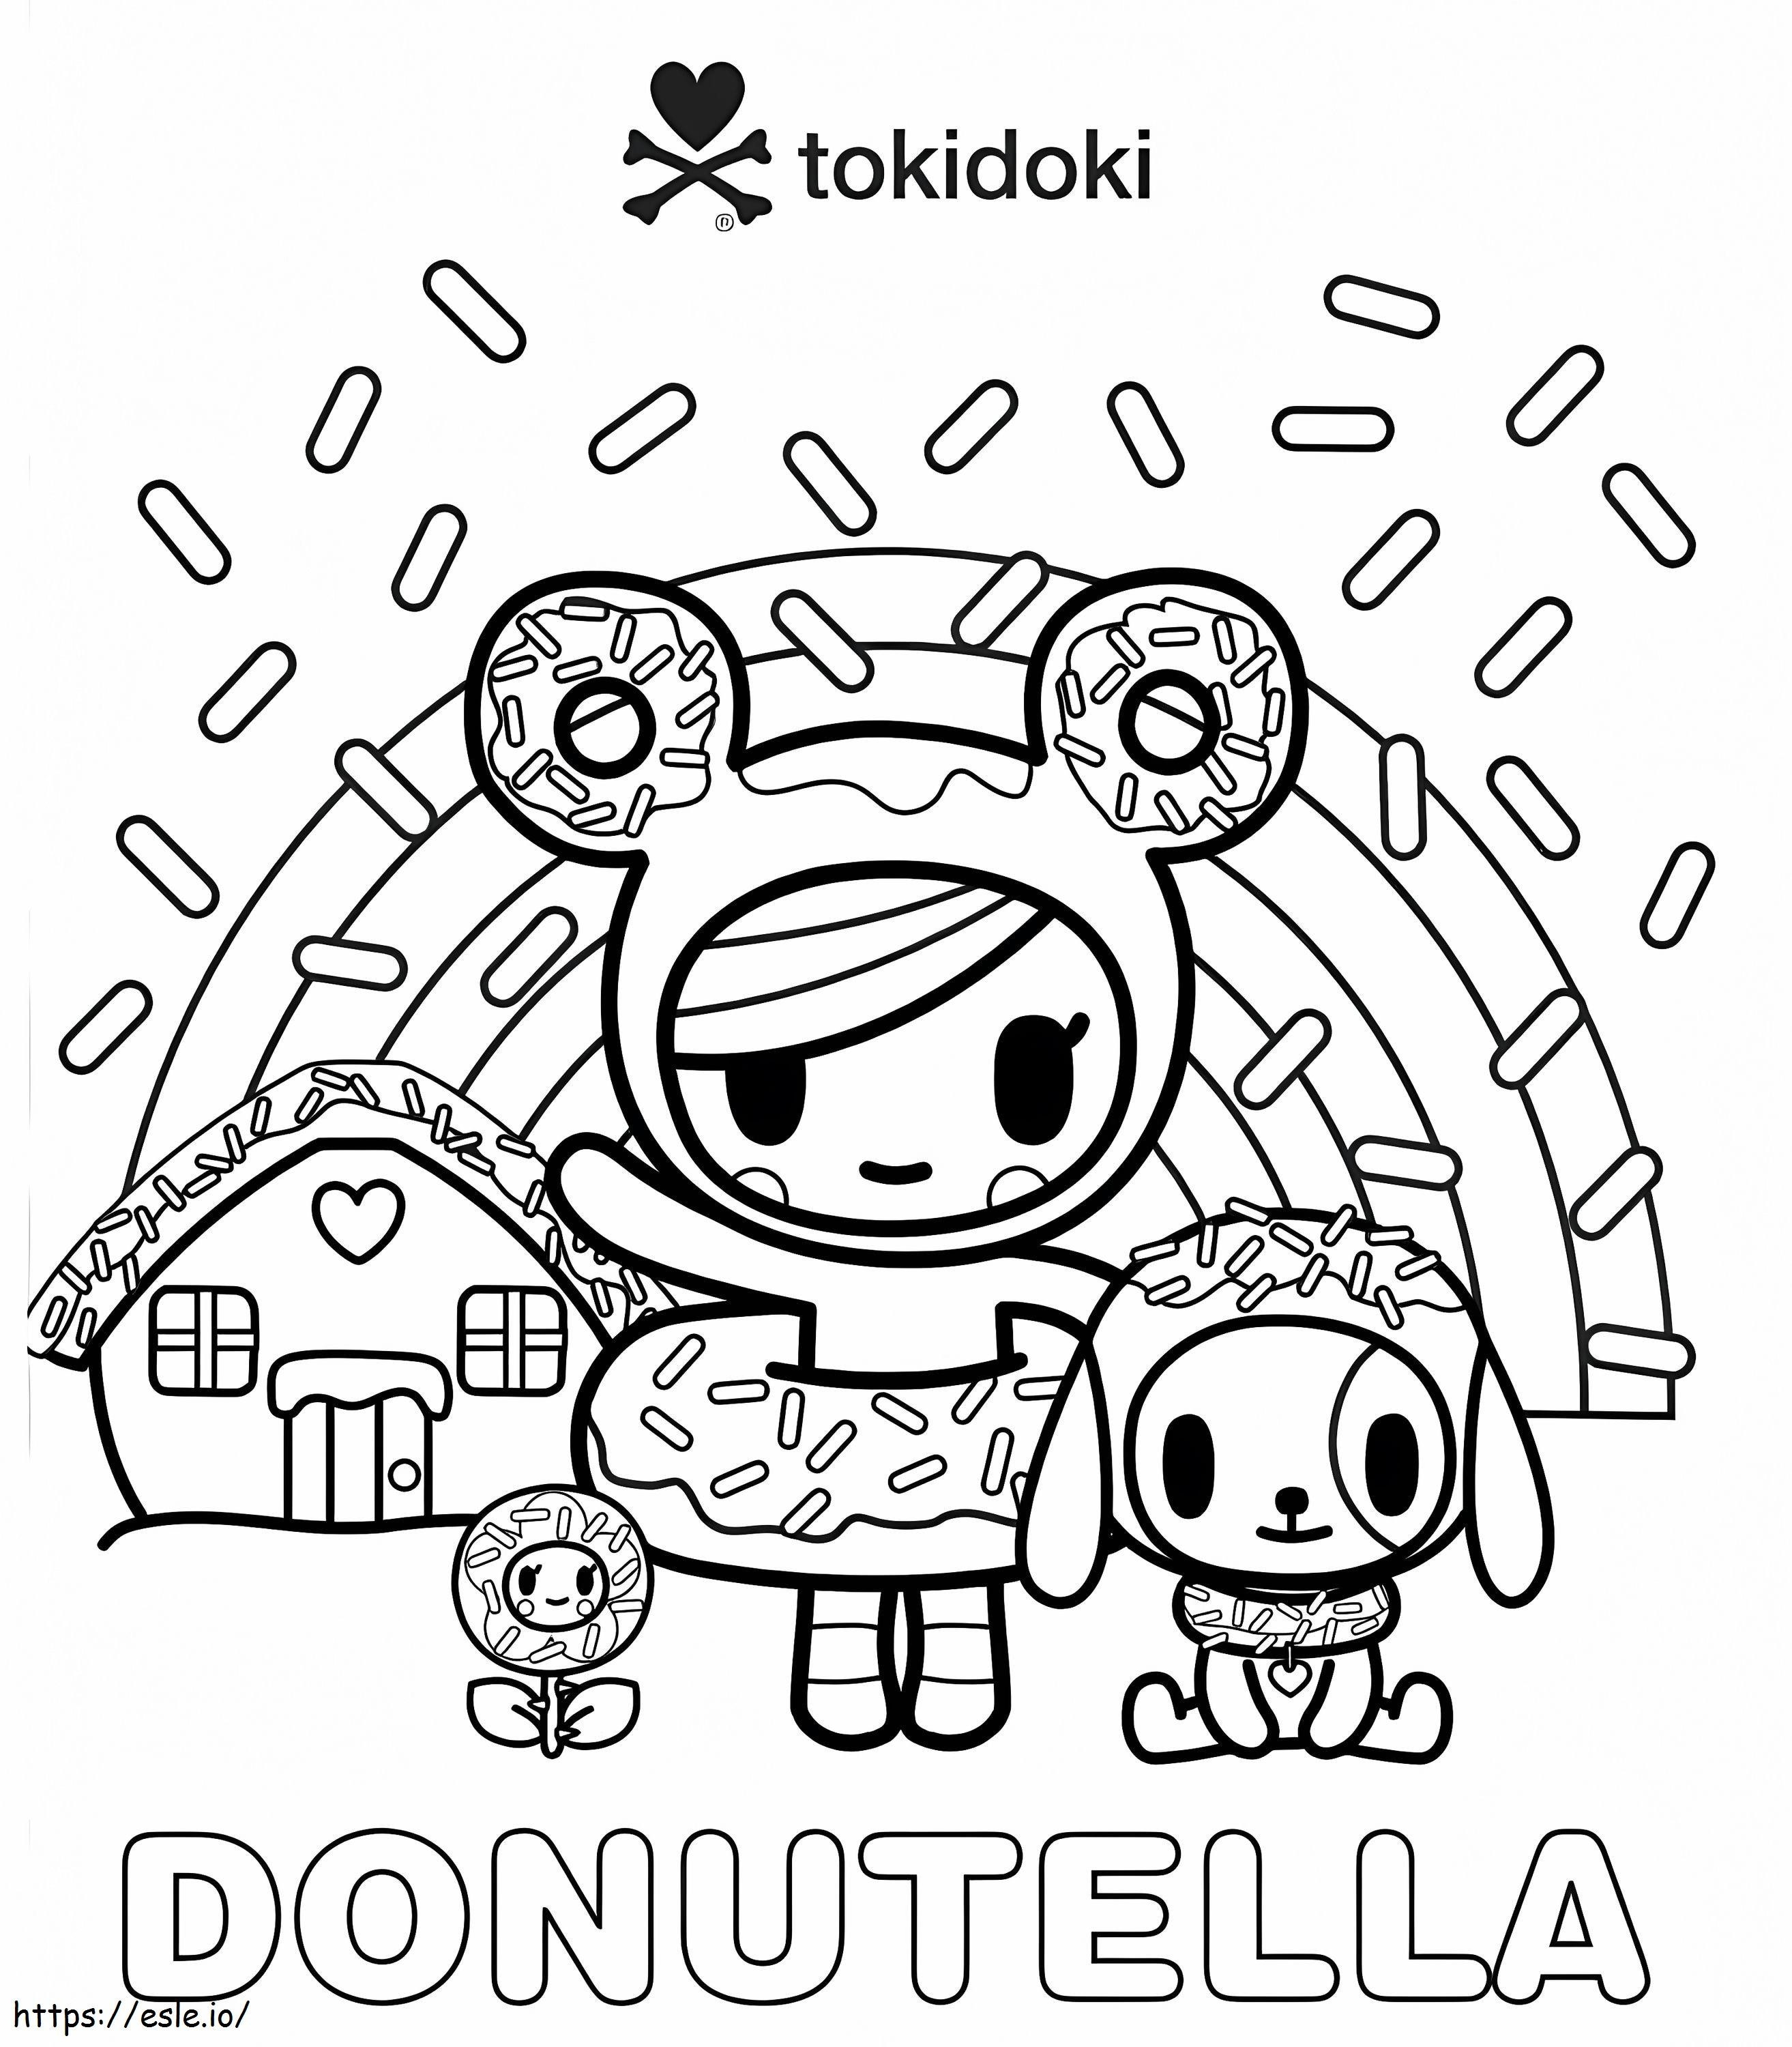 Donutella Tokidoki coloring page